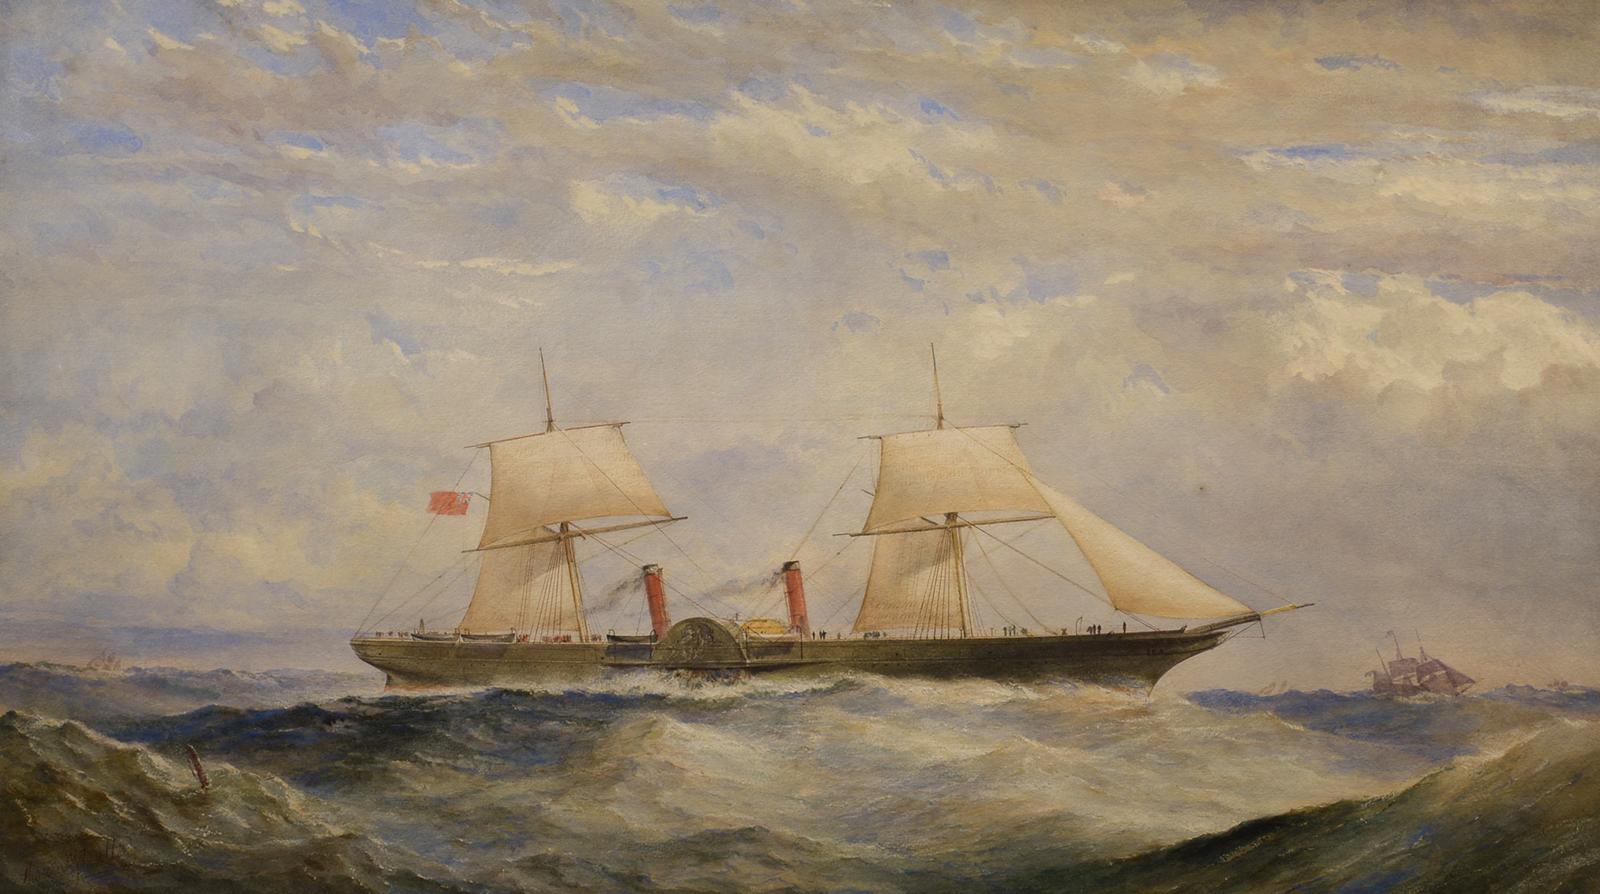 Thomas Goldworthy Dutton Landscape Painting - "Steamer Ship on the High Seas, " 19th c. Realist, British